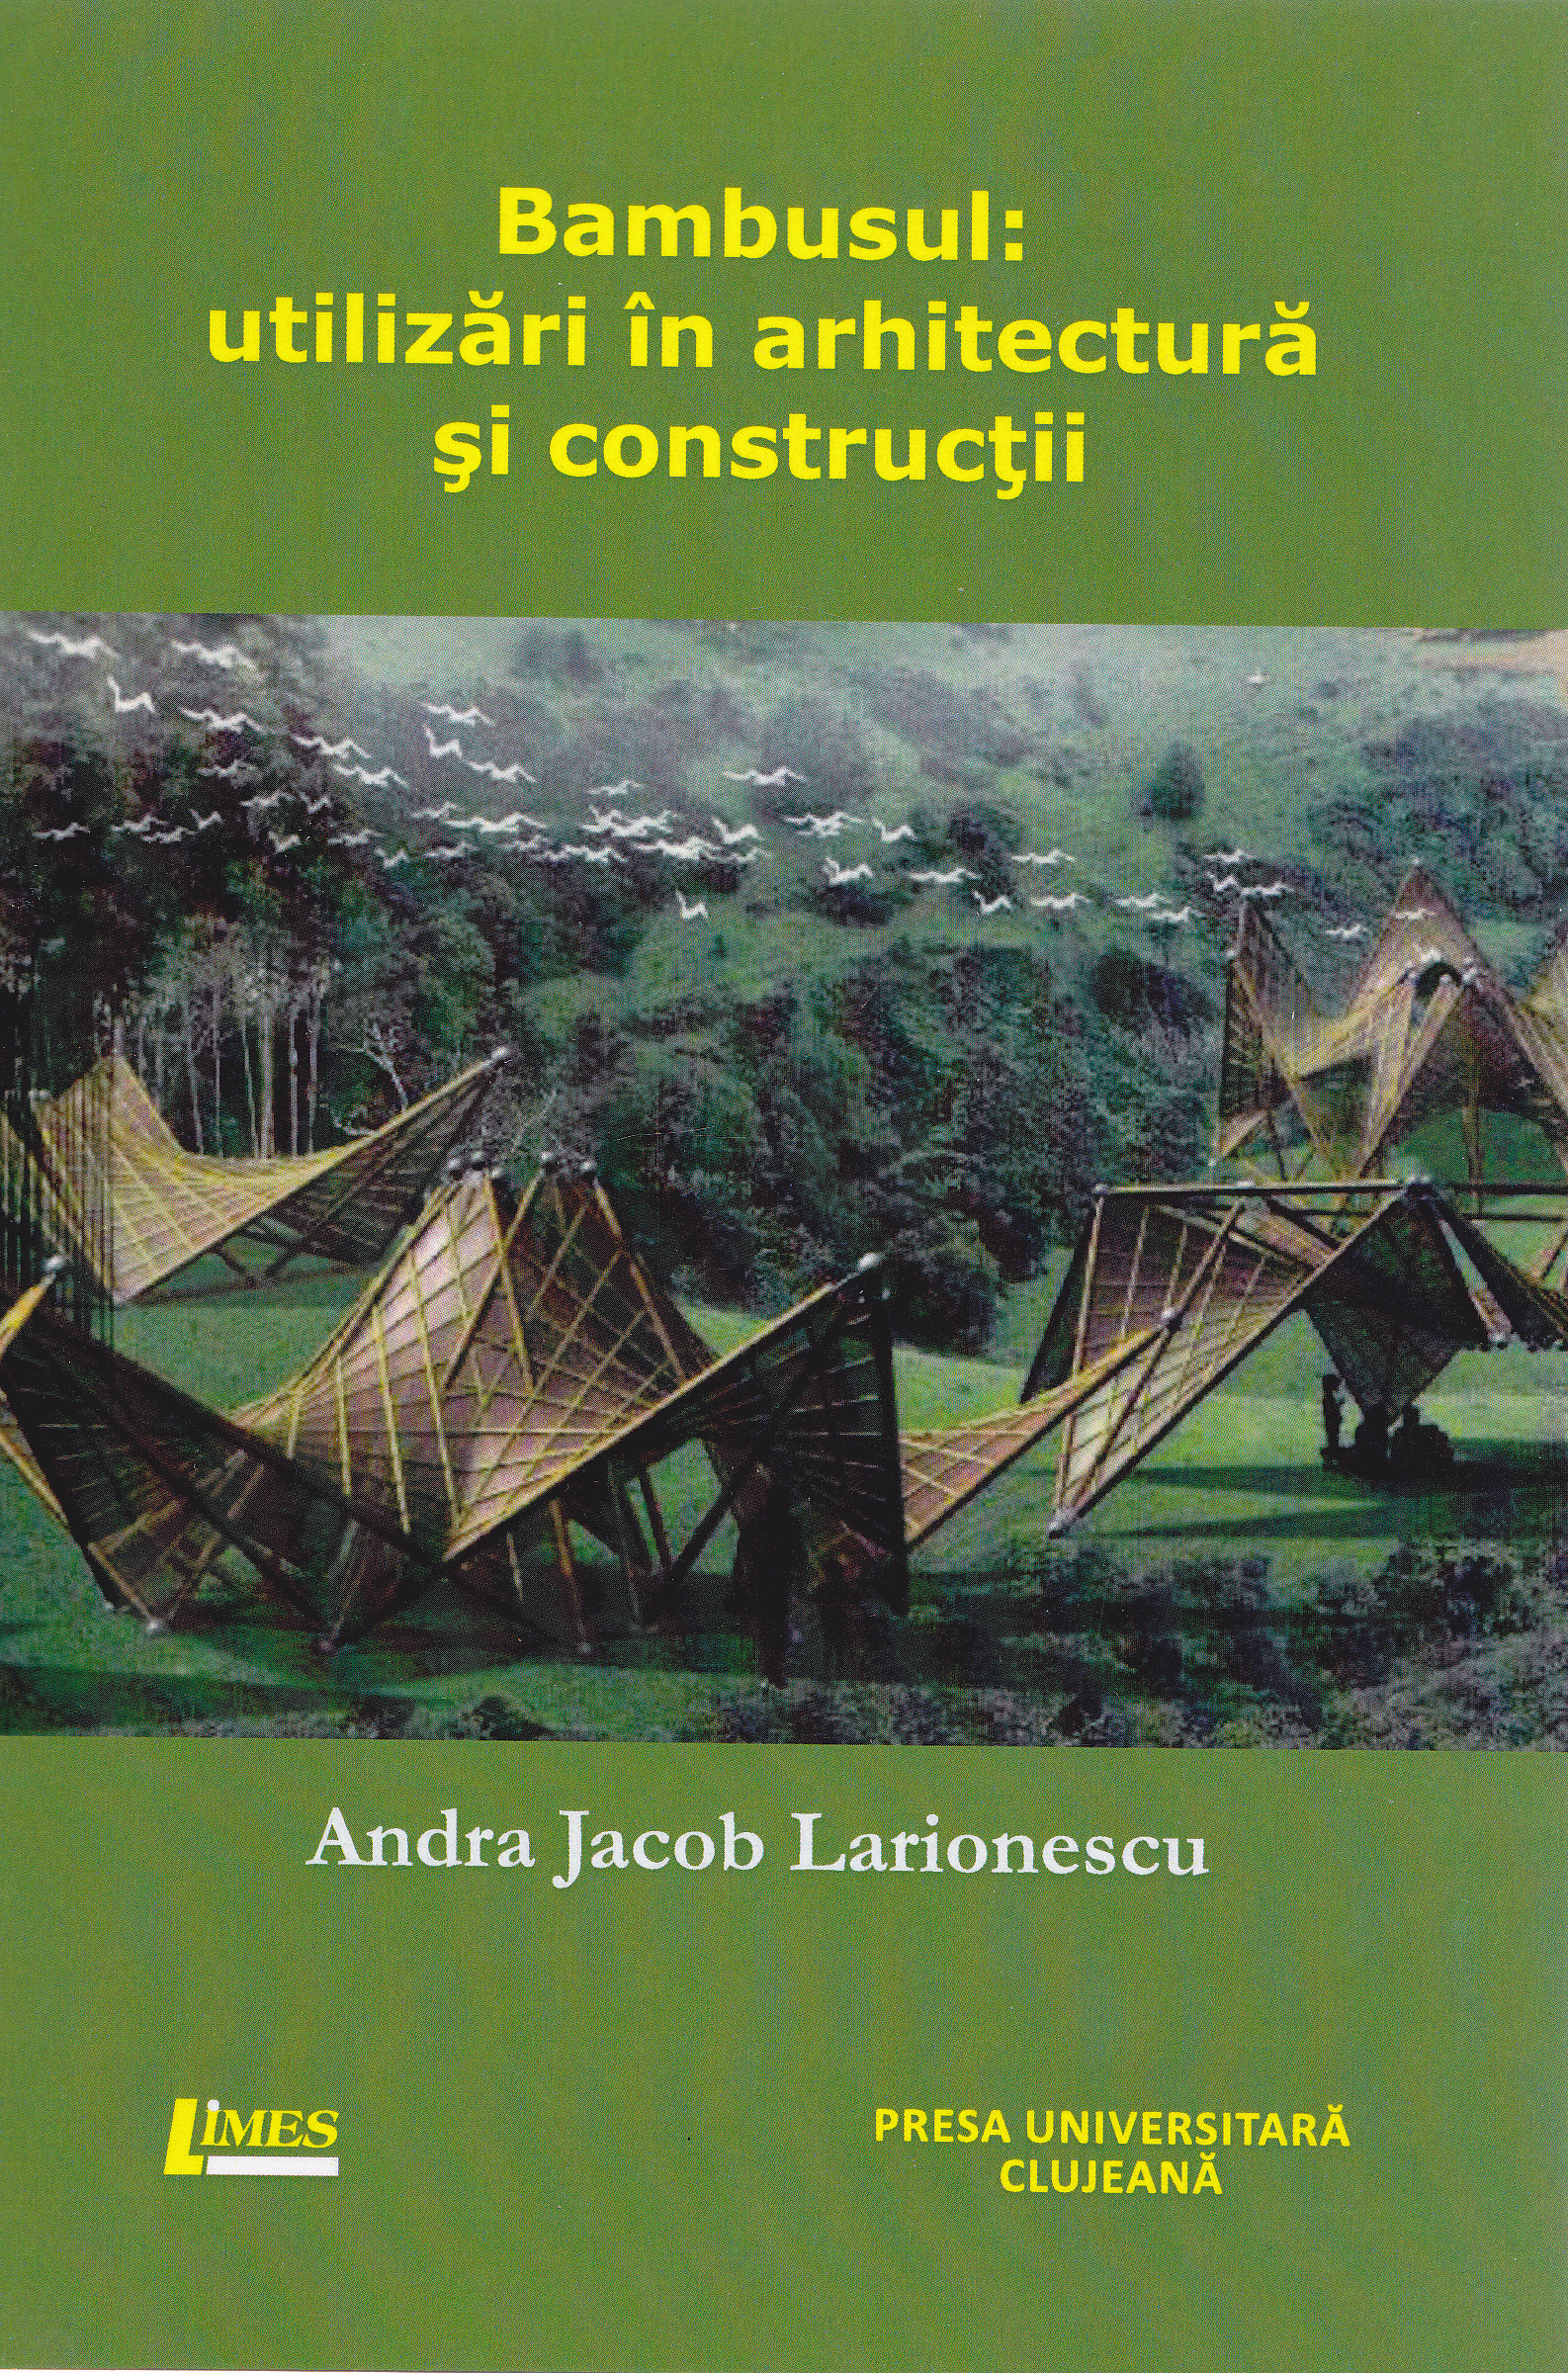 Bambusul: Utilizari in arhitectura si constructii - Andra Jacob Larionescu